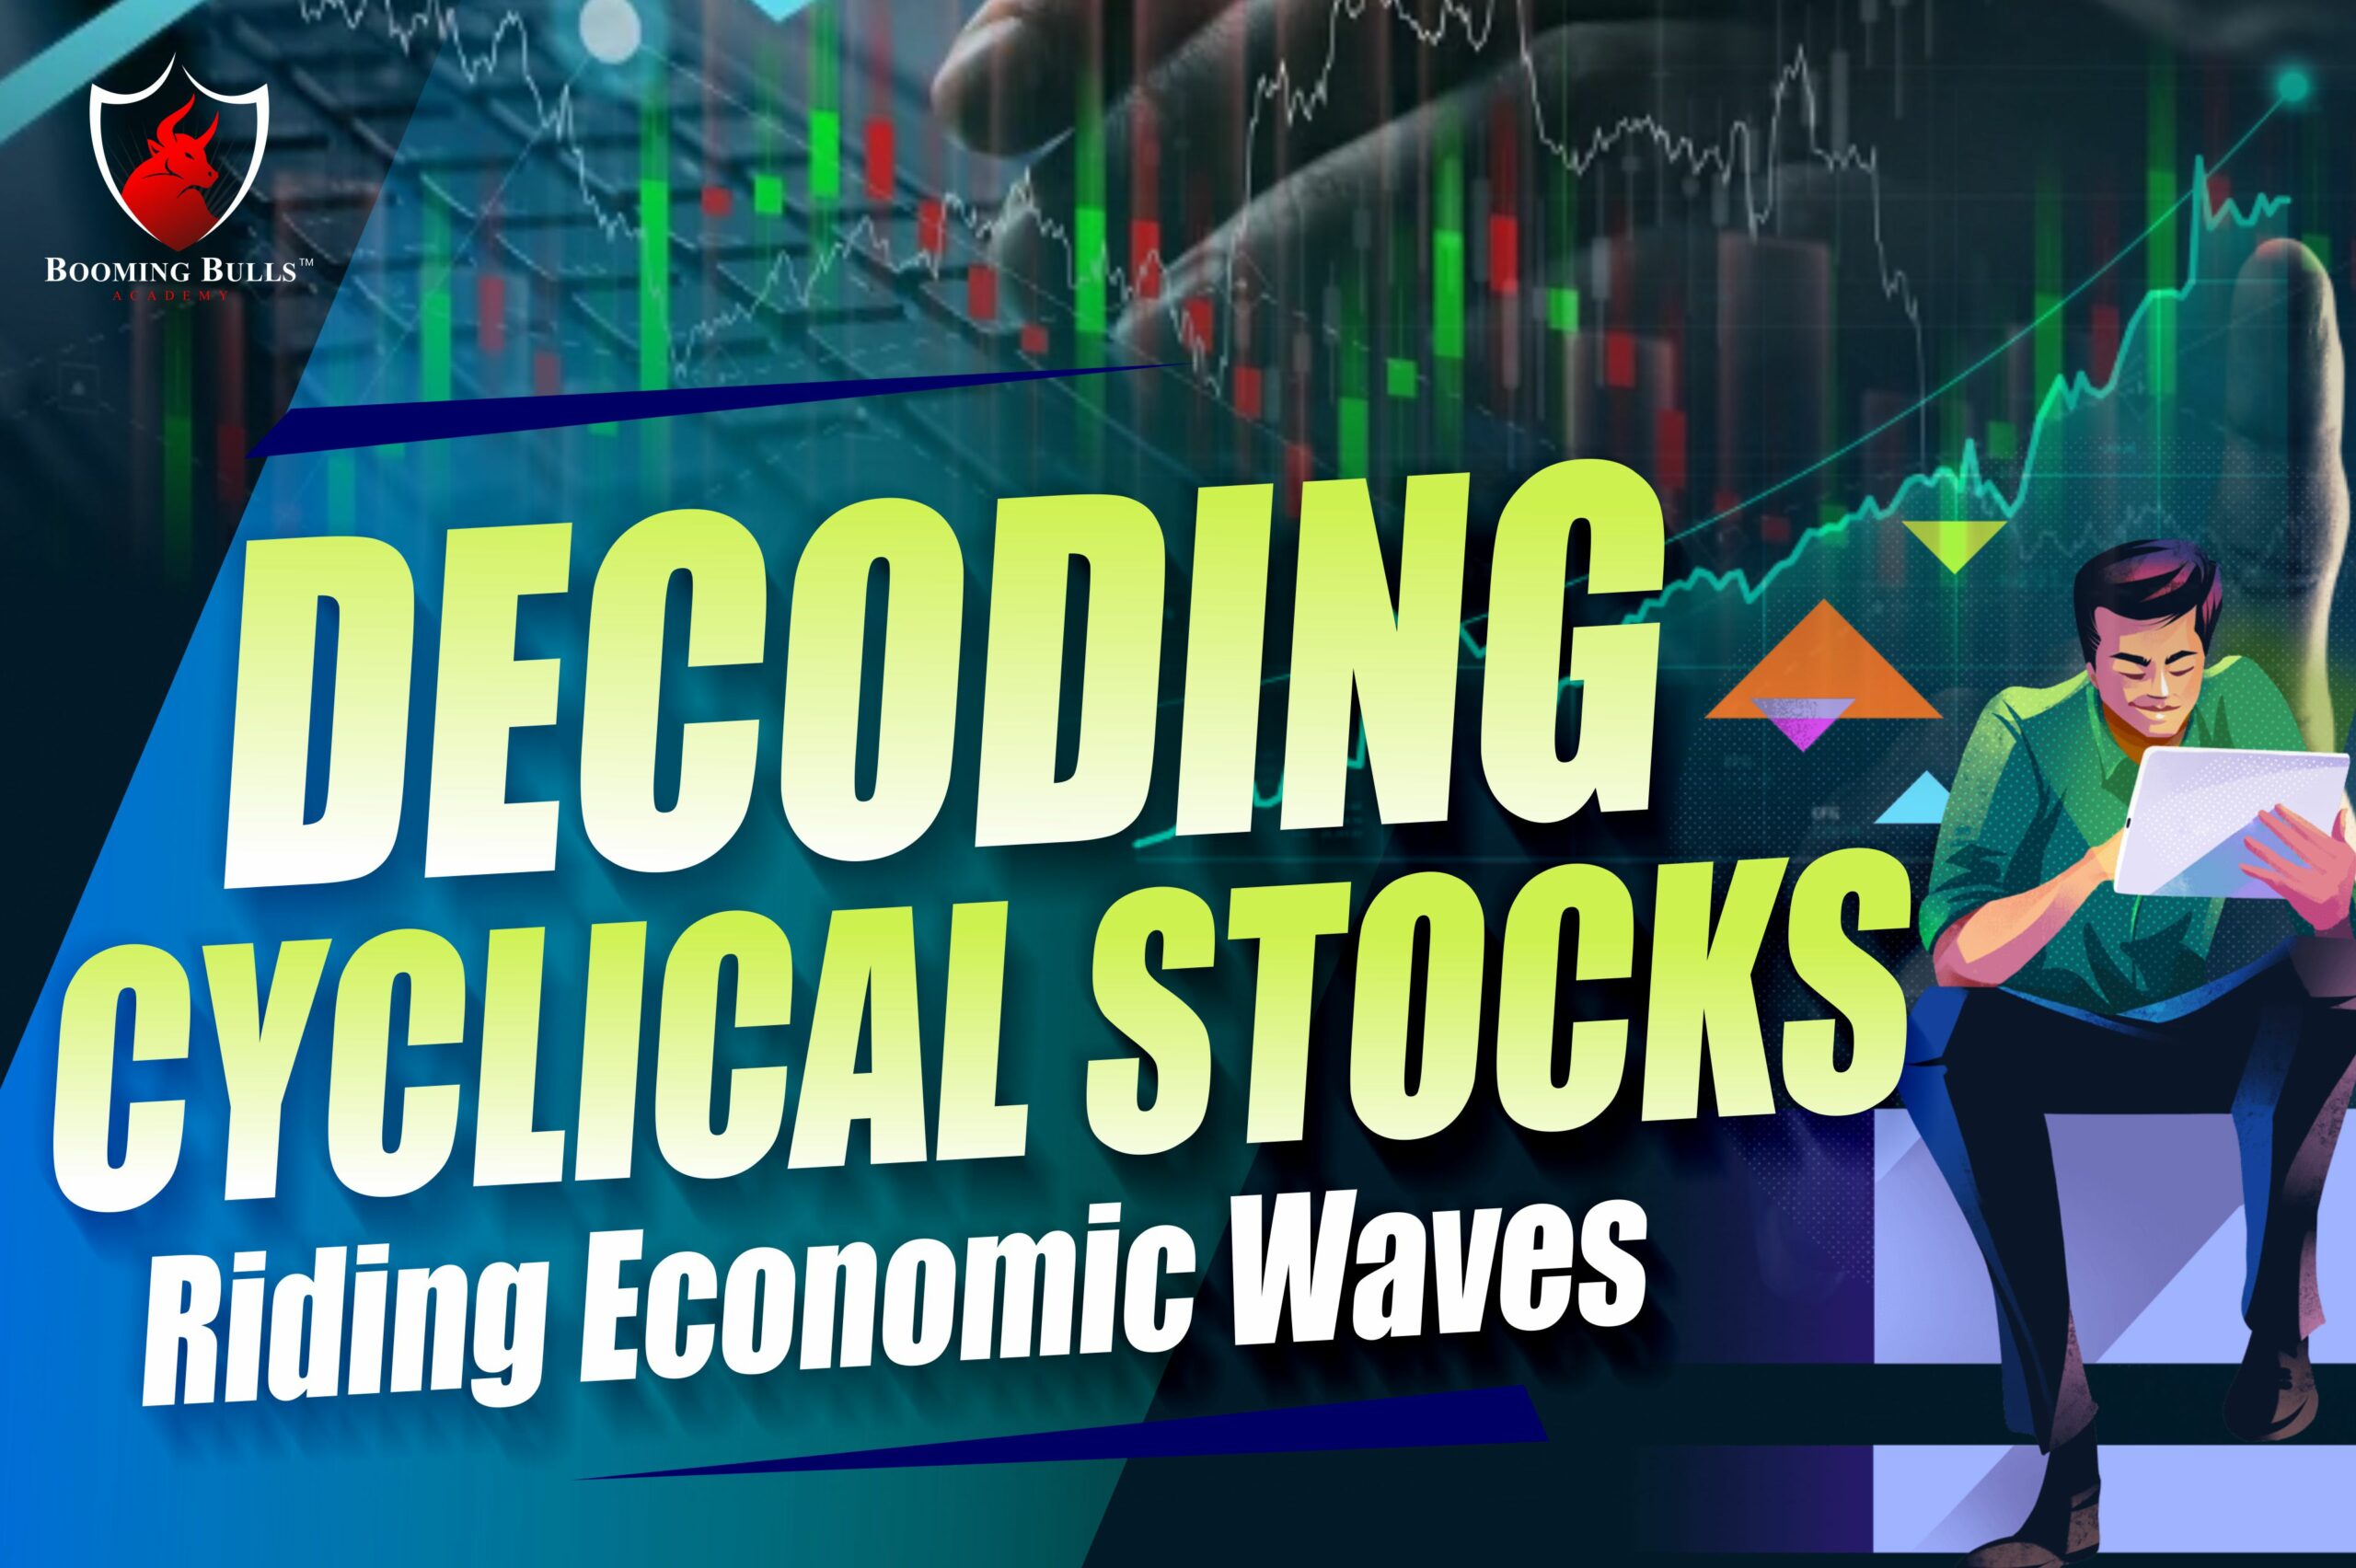 Decoding Cyclical Stocks : Riding Economic Waves